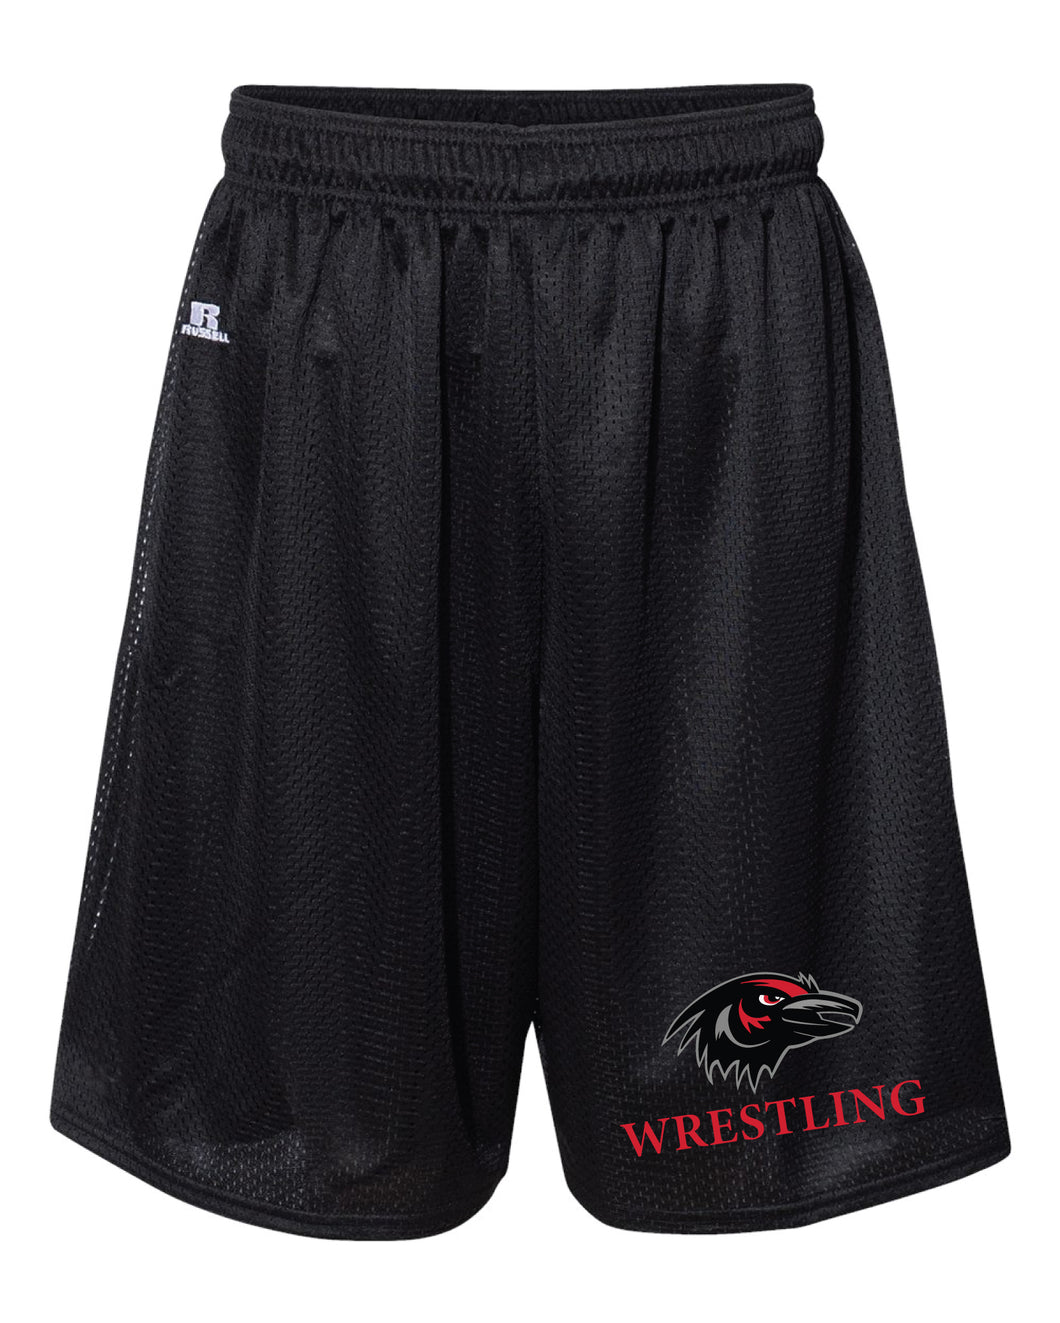 Robbinsville Wrestling Russell Athletic Tech Shorts - Black - 5KounT2018